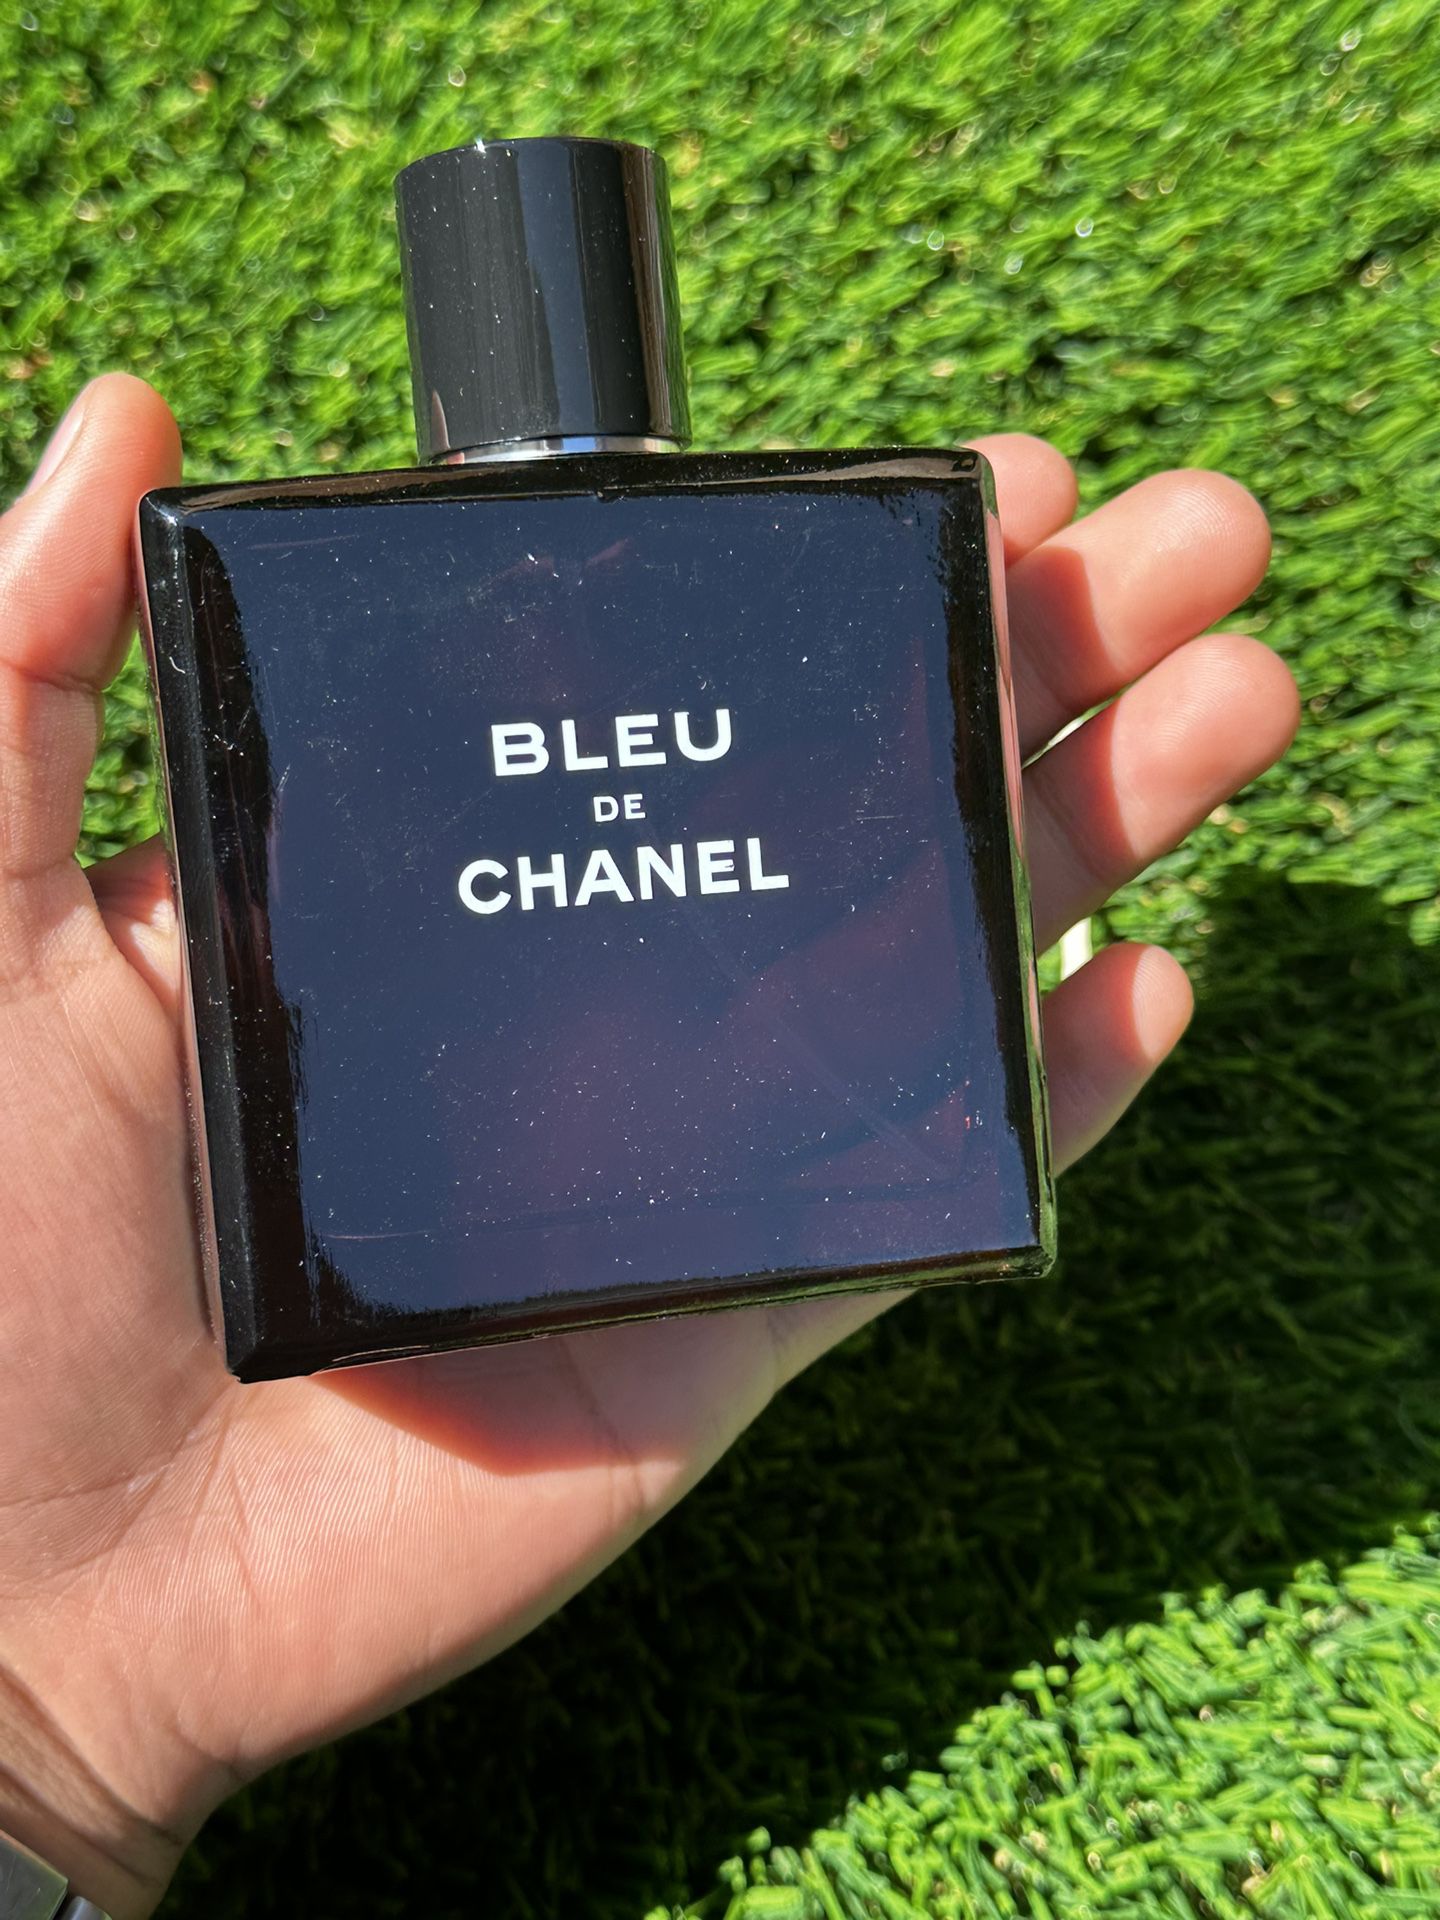 Chanel De Bleu